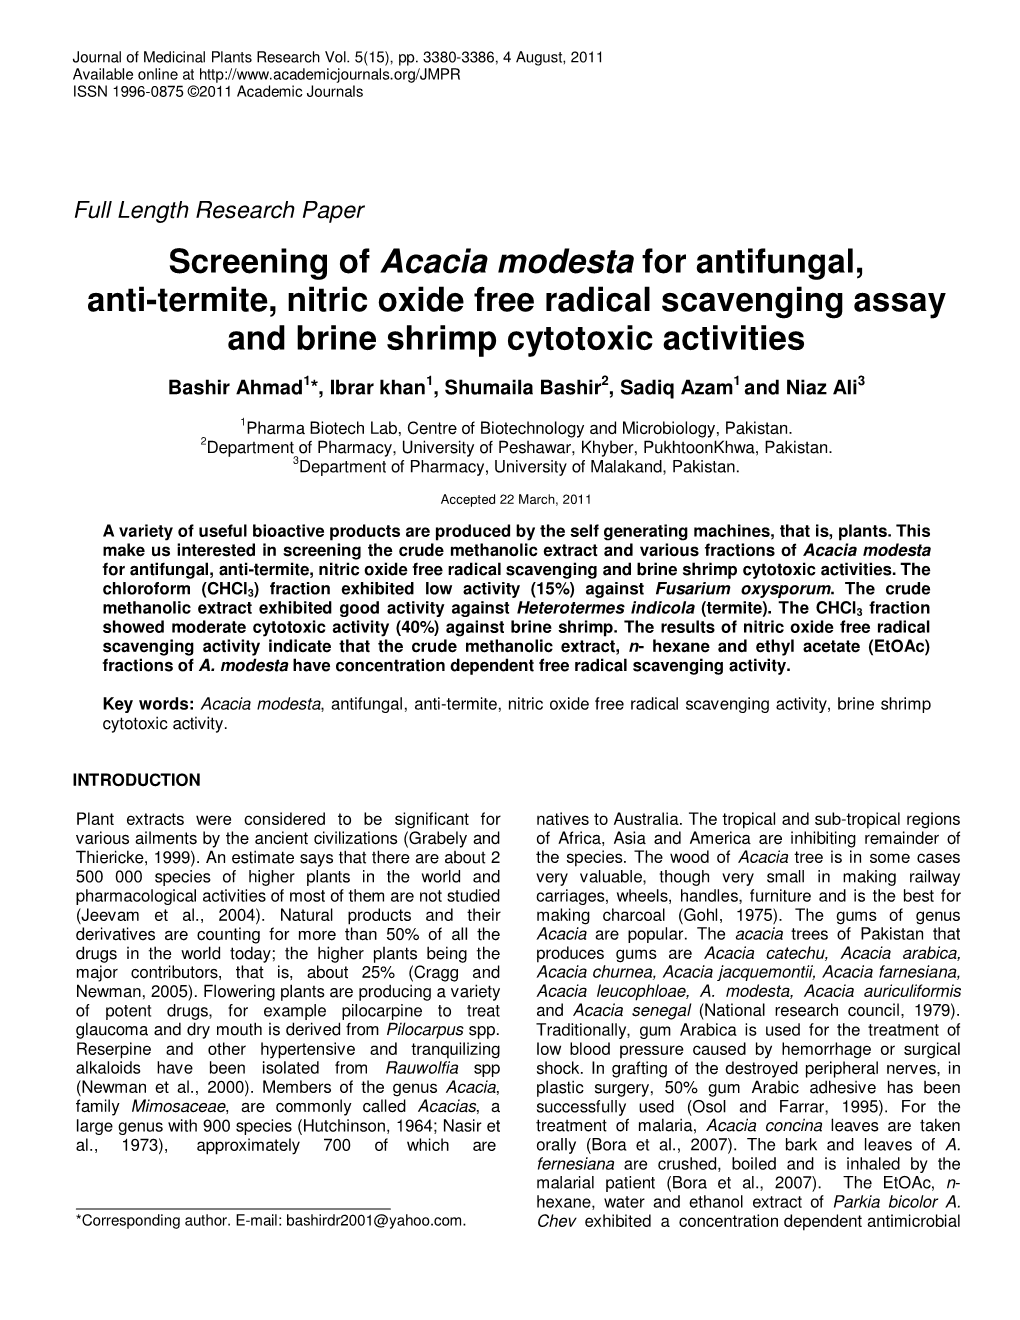 Screening of Acacia Modesta for Antifungal, Anti-Termite, Nitric Oxide Free Radical Scavenging Assay and Brine Shrimp Cytotoxic Activities